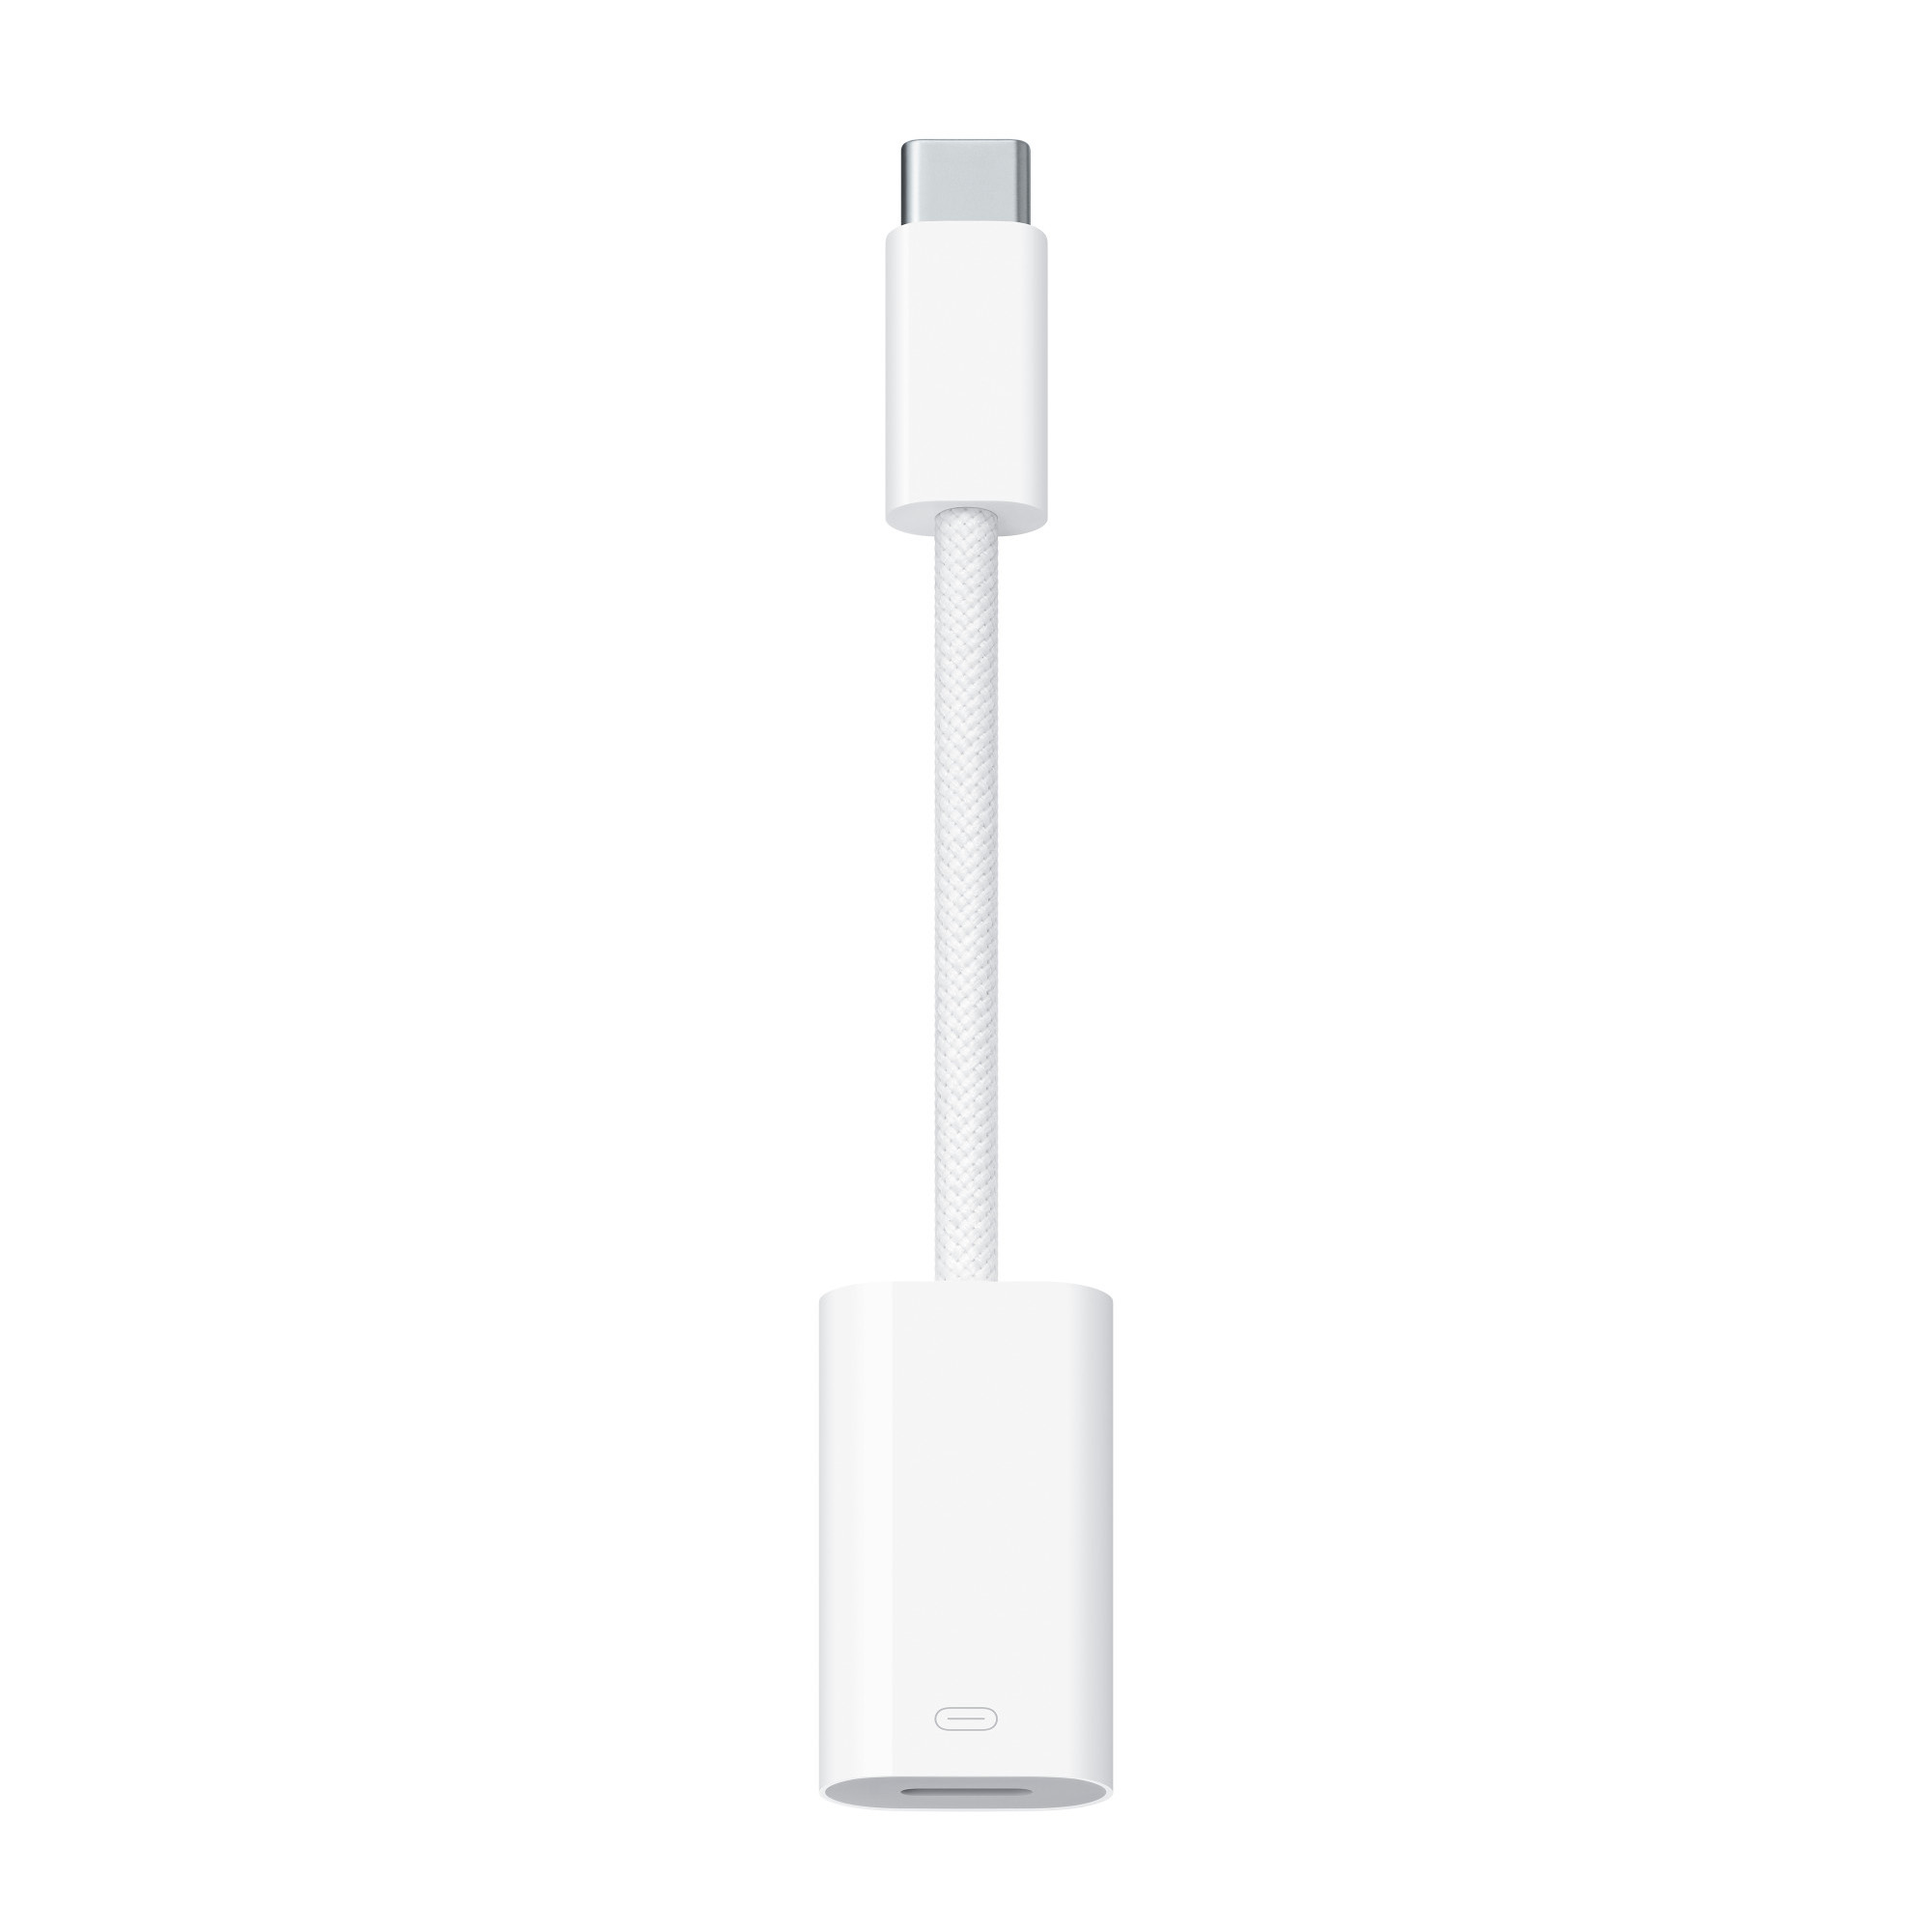 Переходник Apple USB-C to Lightning Adapter